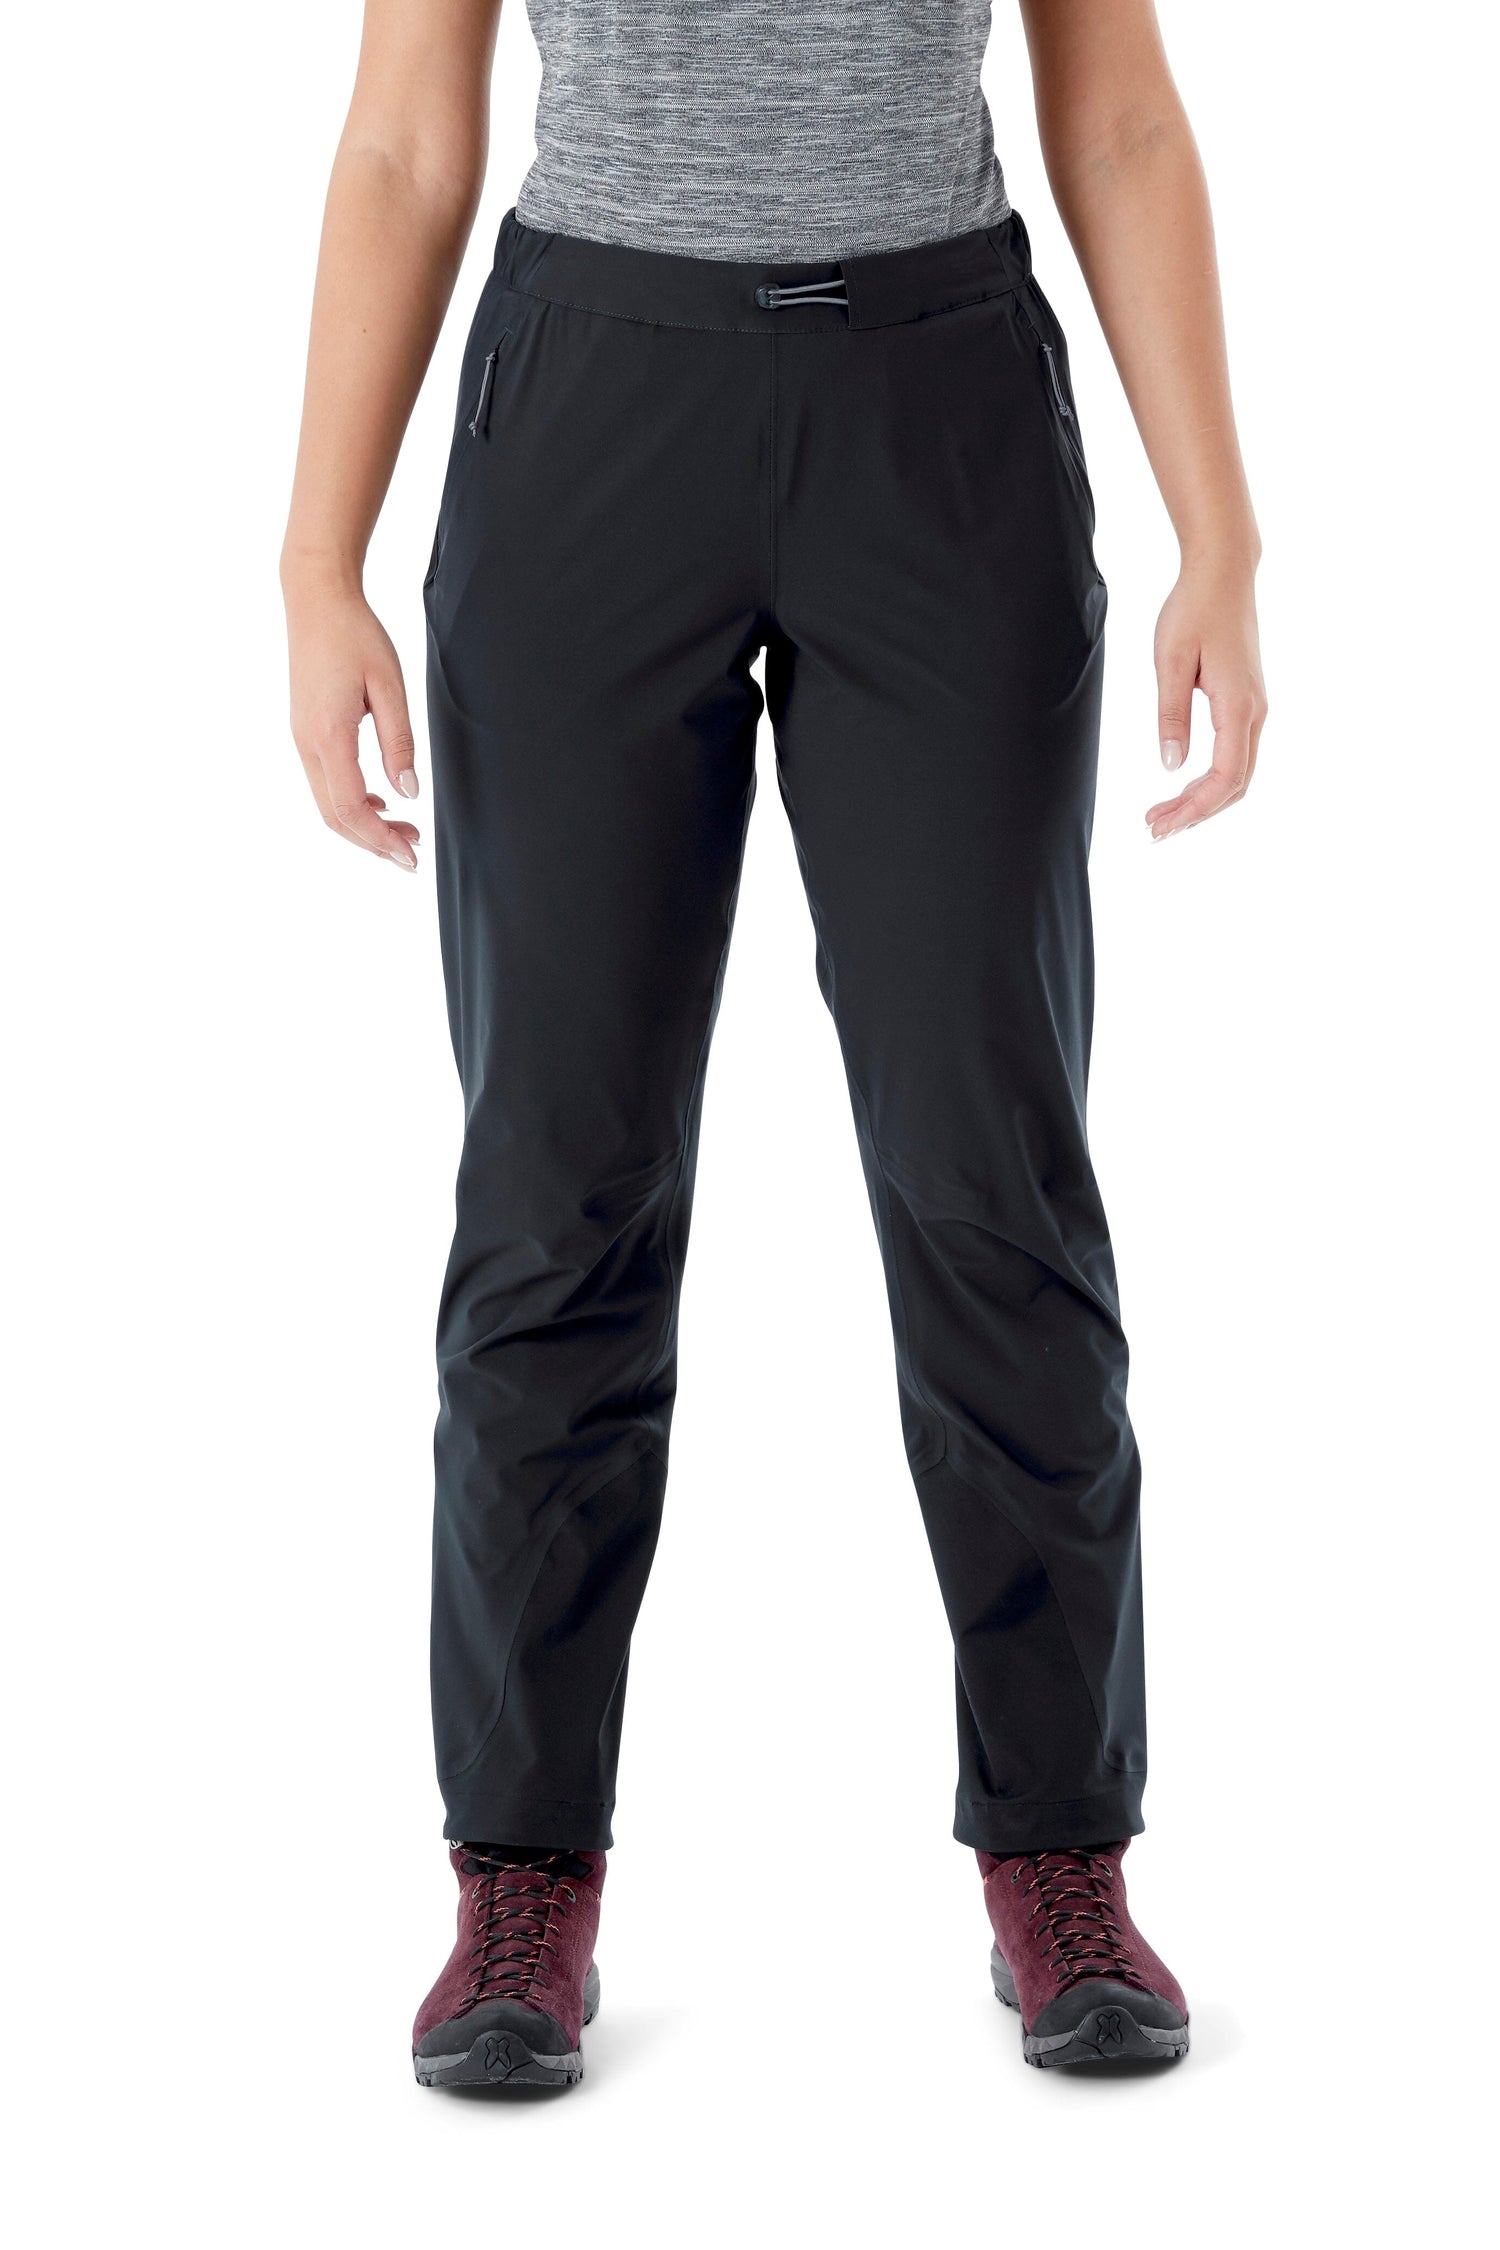 Rab - W's Kinetic 2.0 Pants - 3-layer Proflex™ Kinetic 2.0 fabric - Weekendbee - sustainable sportswear